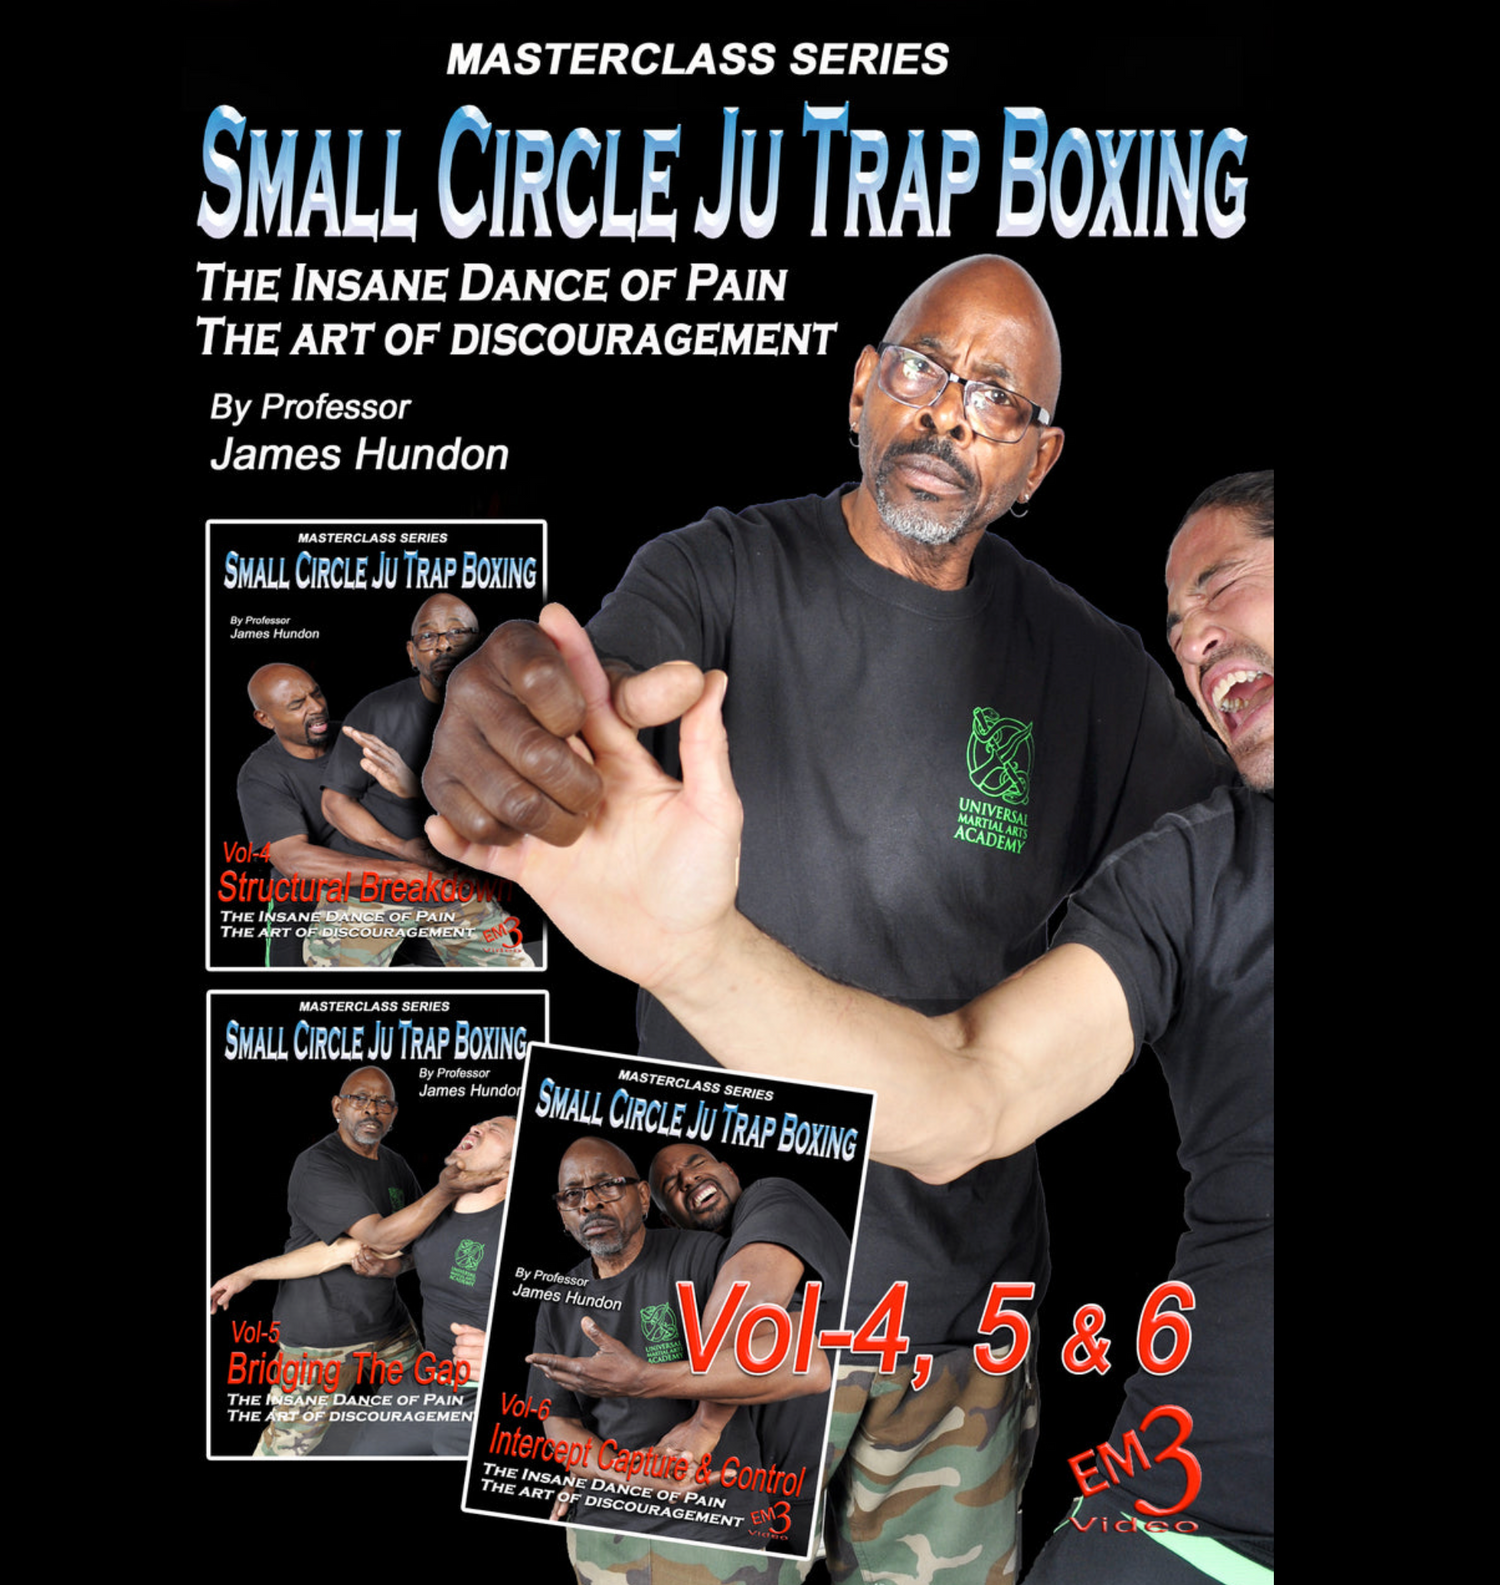 Small Circle Ju Trap Boxing Vol 4-6 by James Hundon (On Demand)